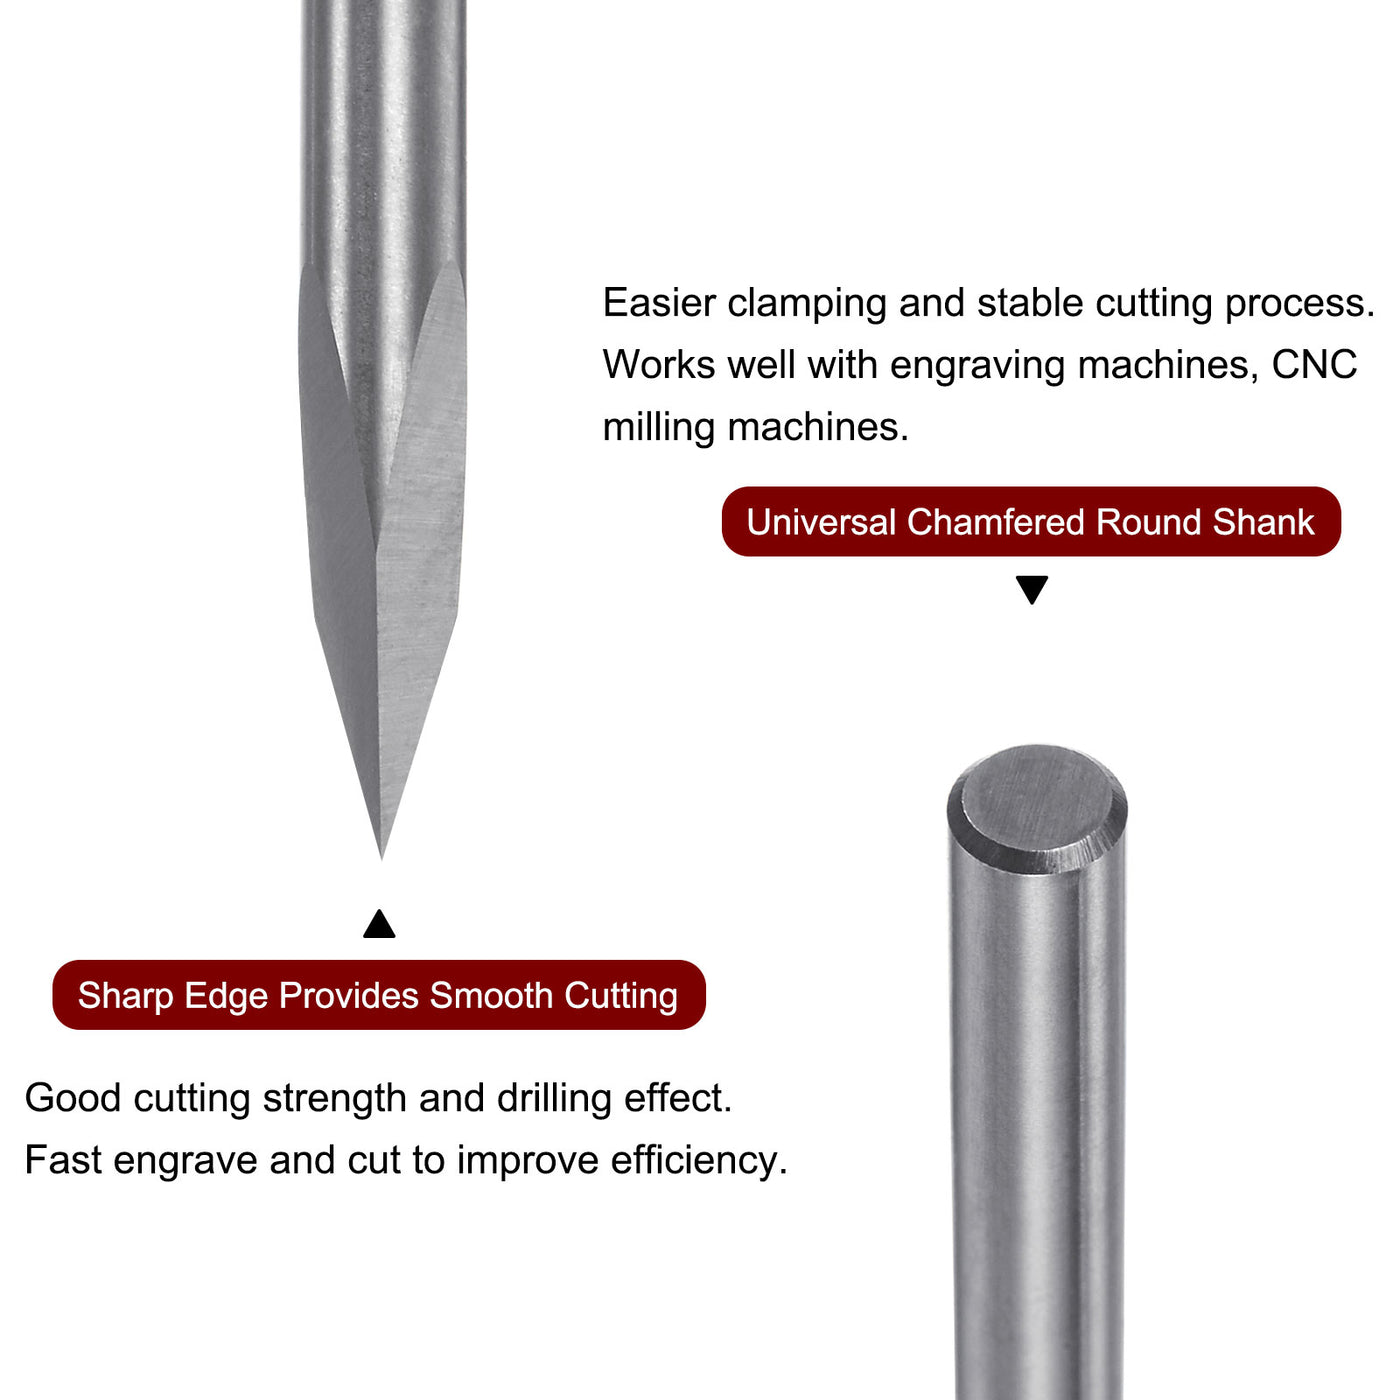 Harfington 3.175mm Shank 0.1mm Tip 30 Degree Carbide 3 Flutes Wood Engraving CNC Bit 2pcs